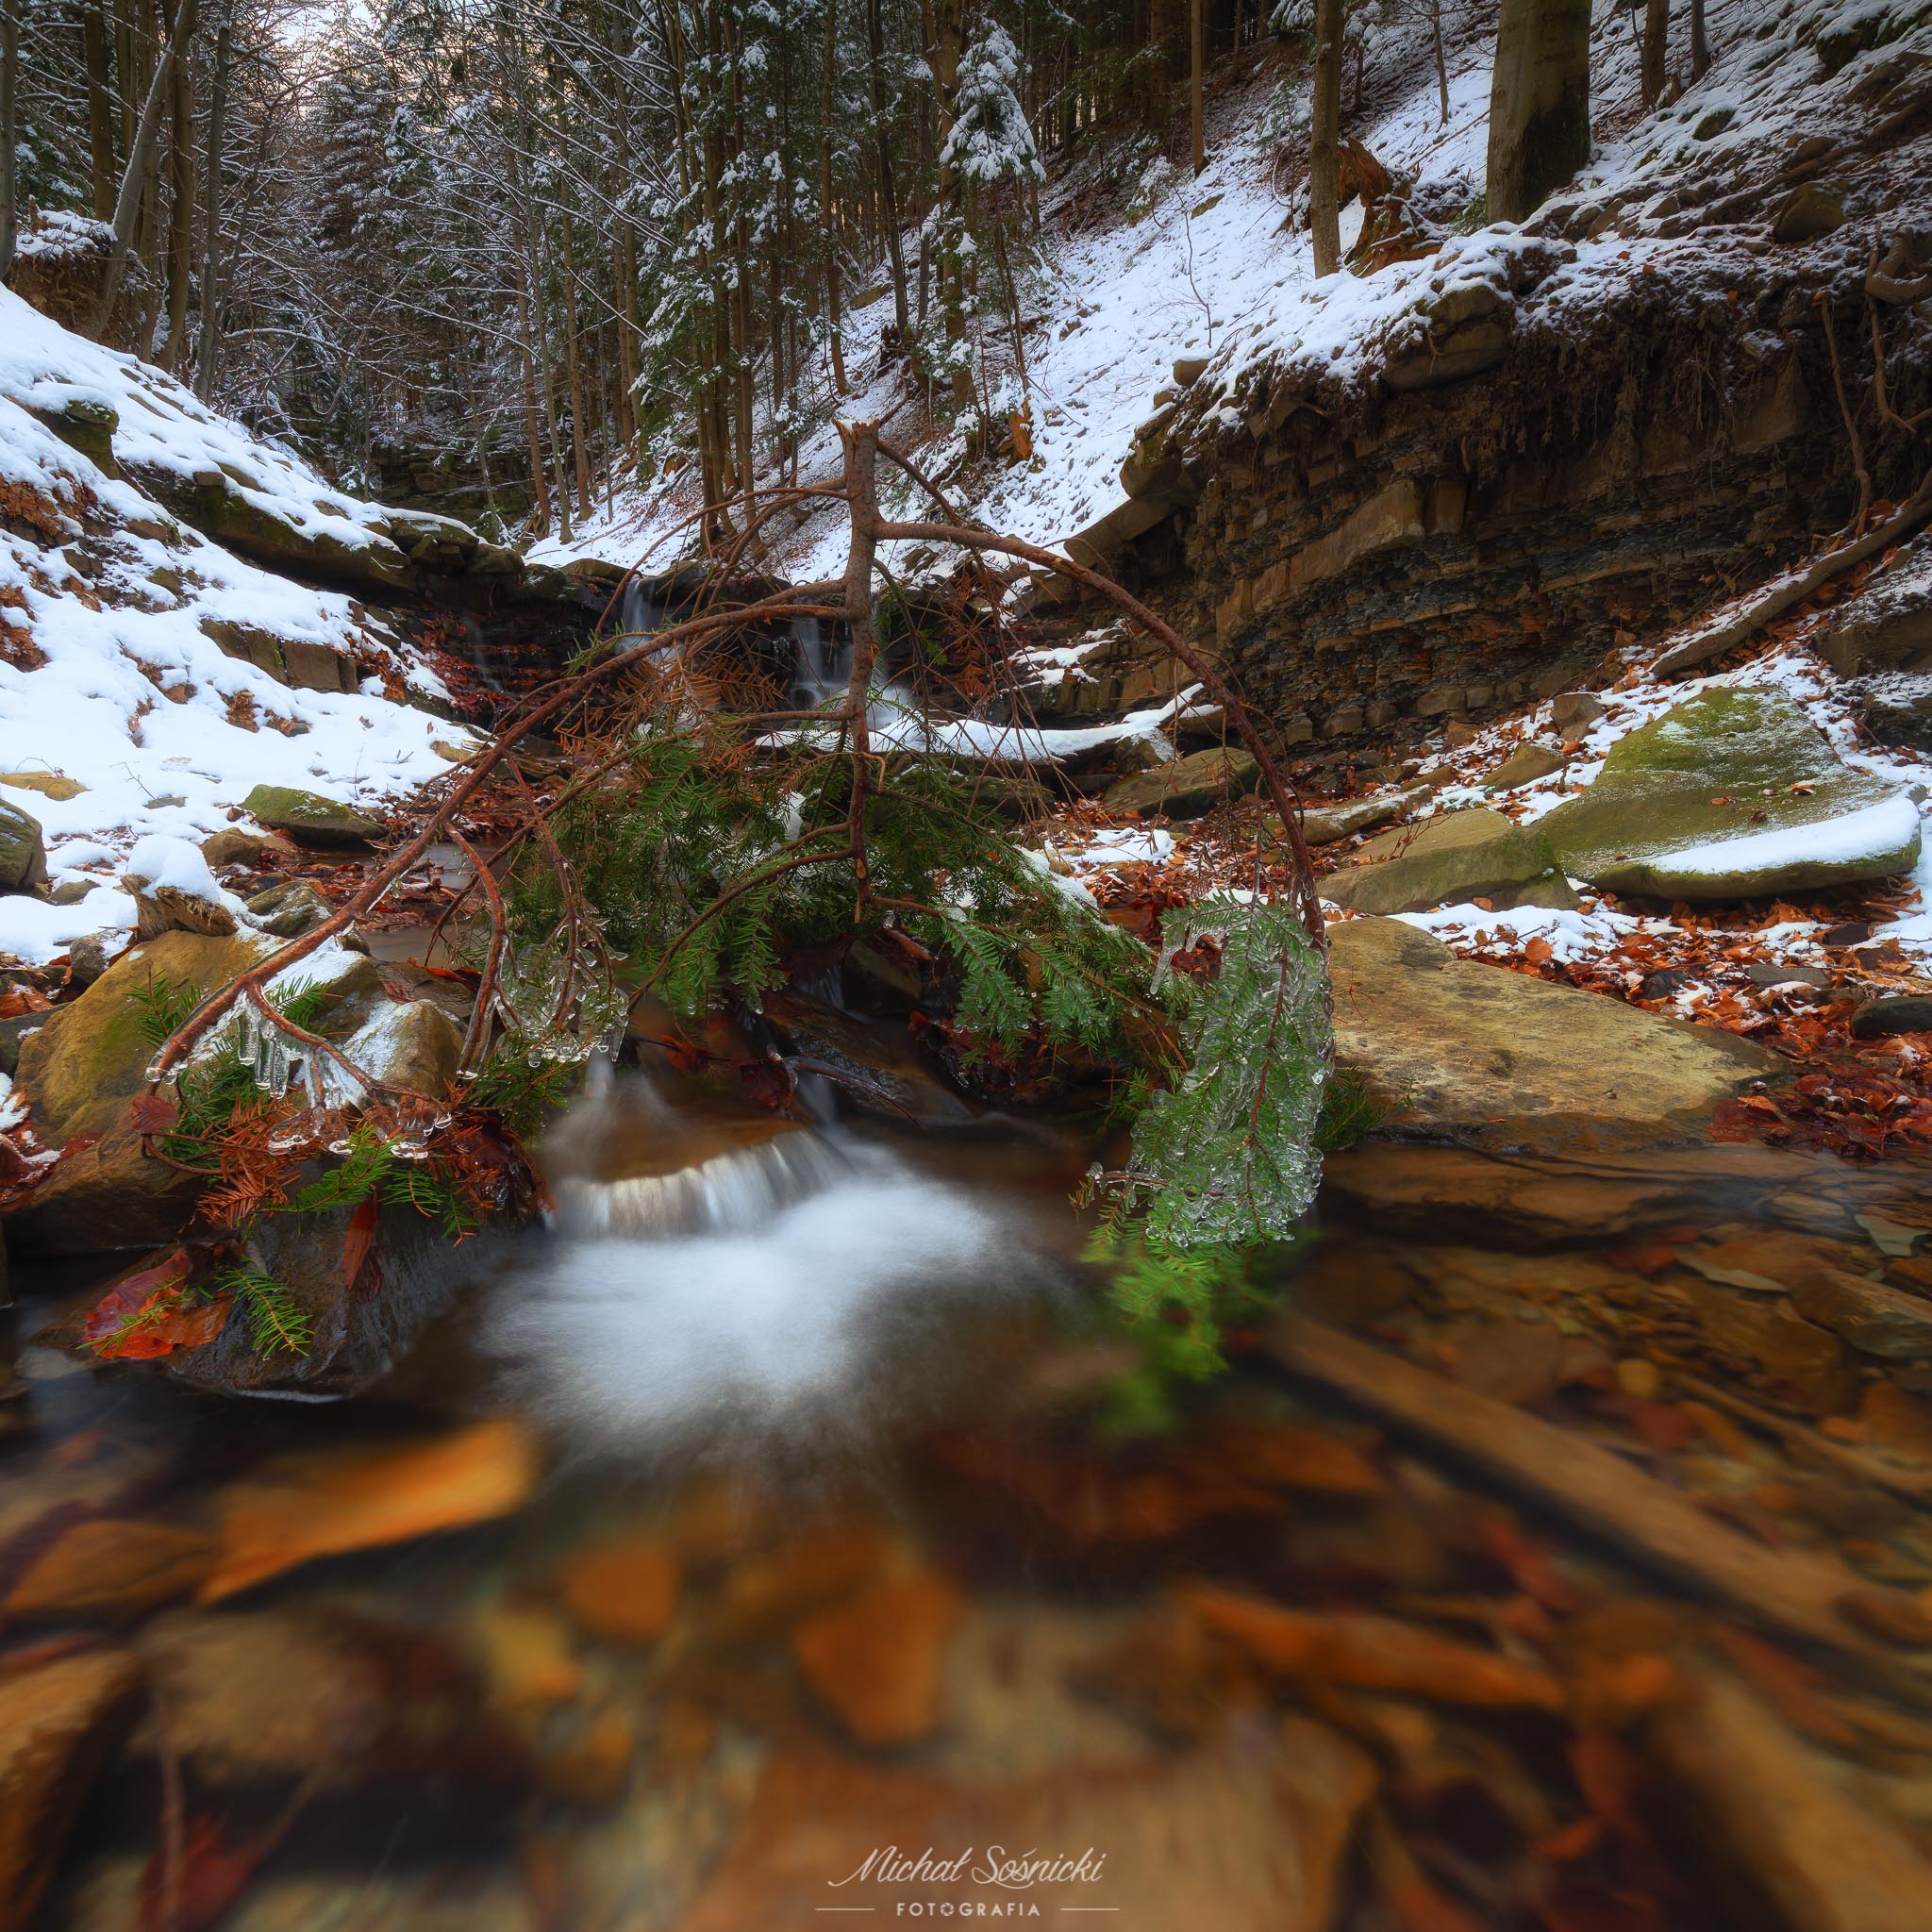 #poland #benro #benq #haida #winter #snow #tree #nature #river, Michał Sośnicki